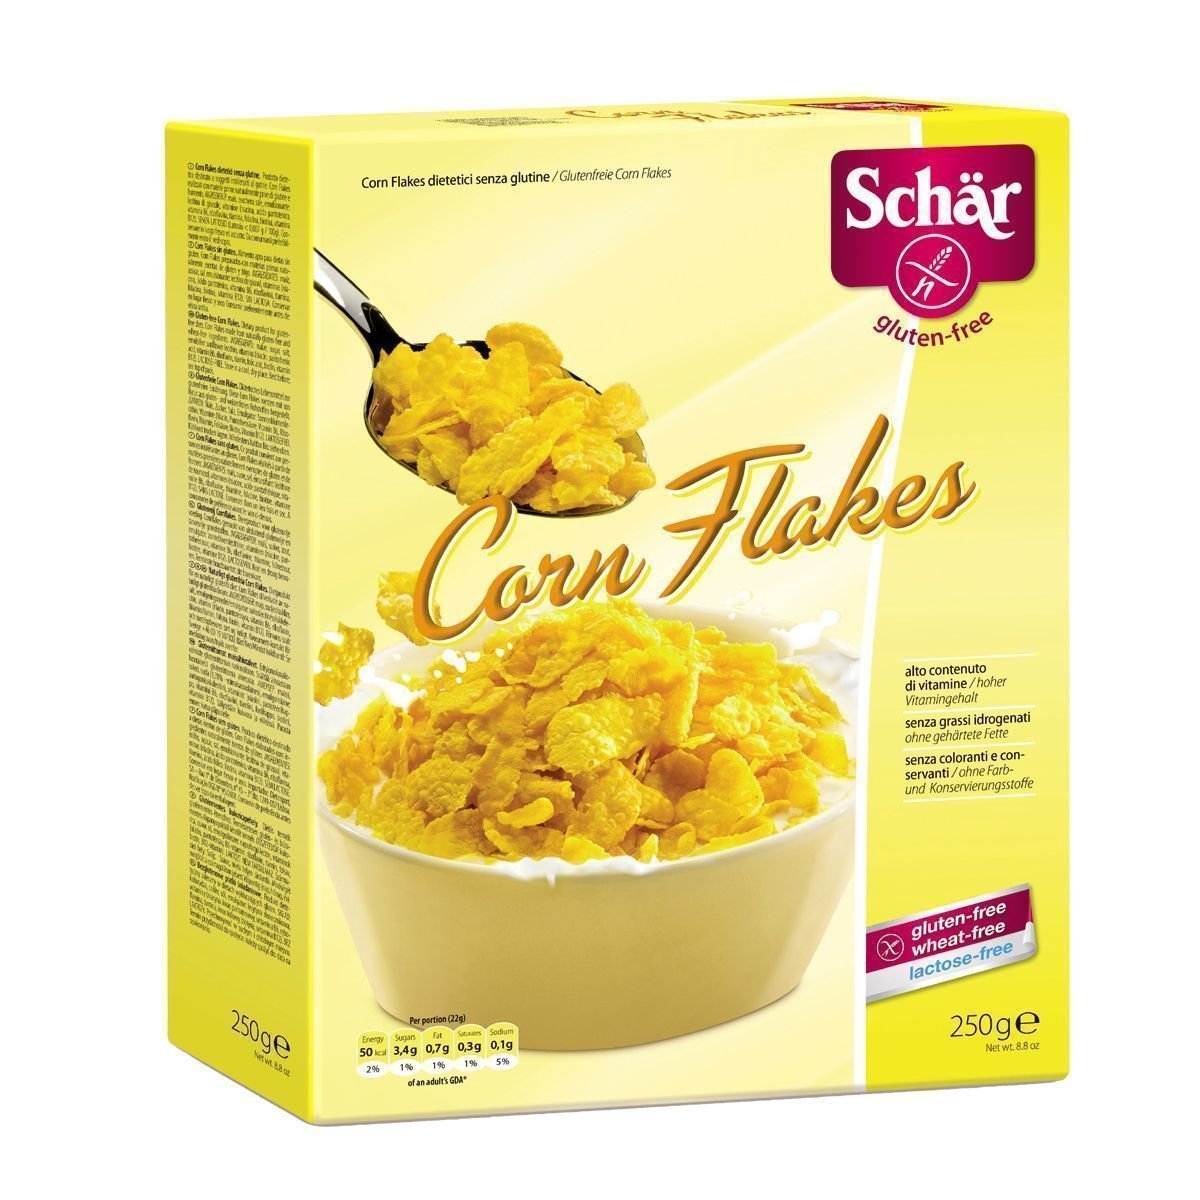 Cereal Matinal CORN FLAKES 190g